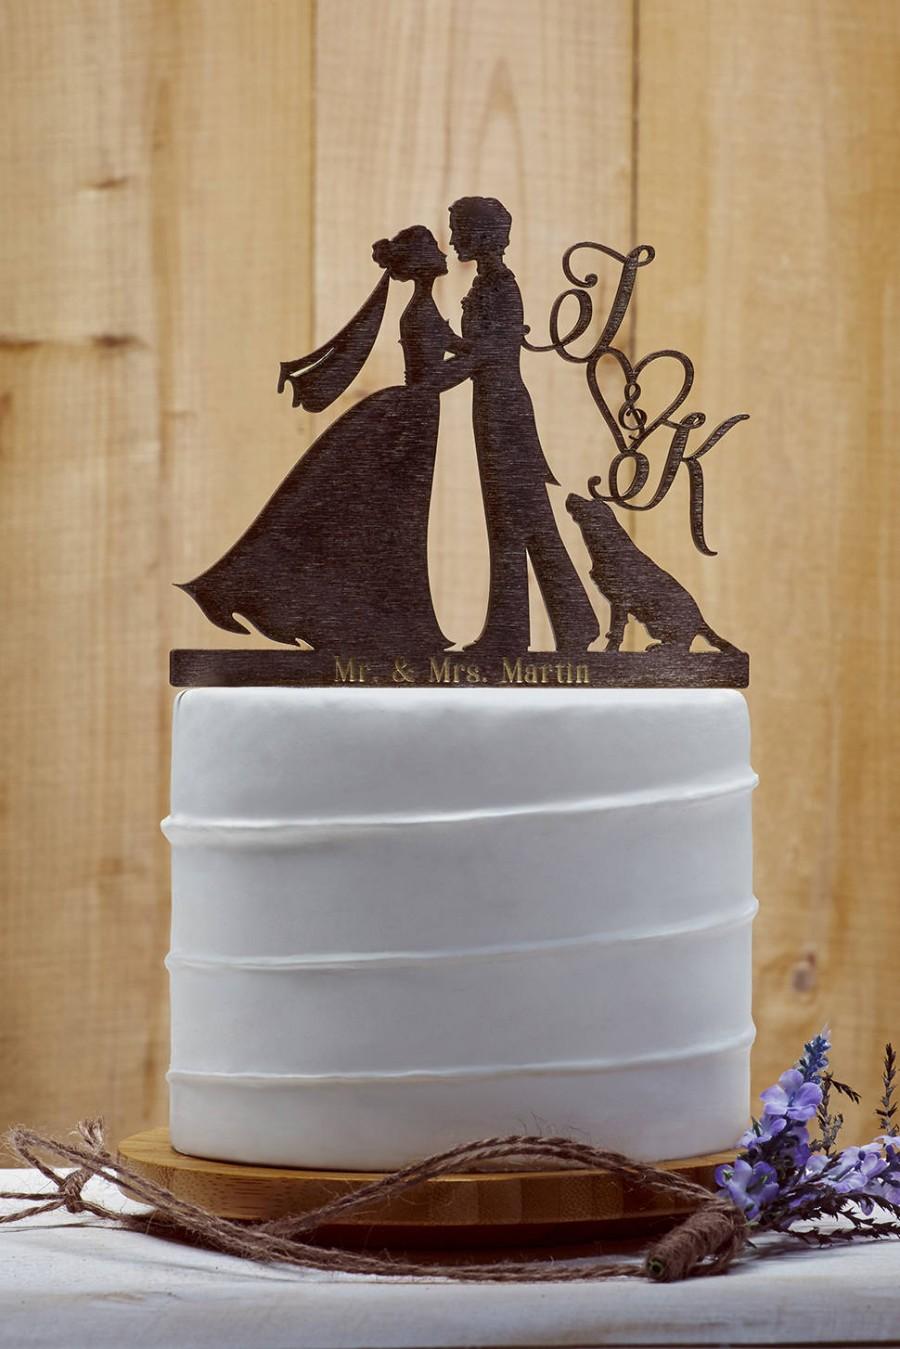 زفاف - Customized Wedding Cake Topper With Dog, Personalized Cake Topper for Wedding, Custom Personalized Wedding Cake Topper, Couple Cake Topper16